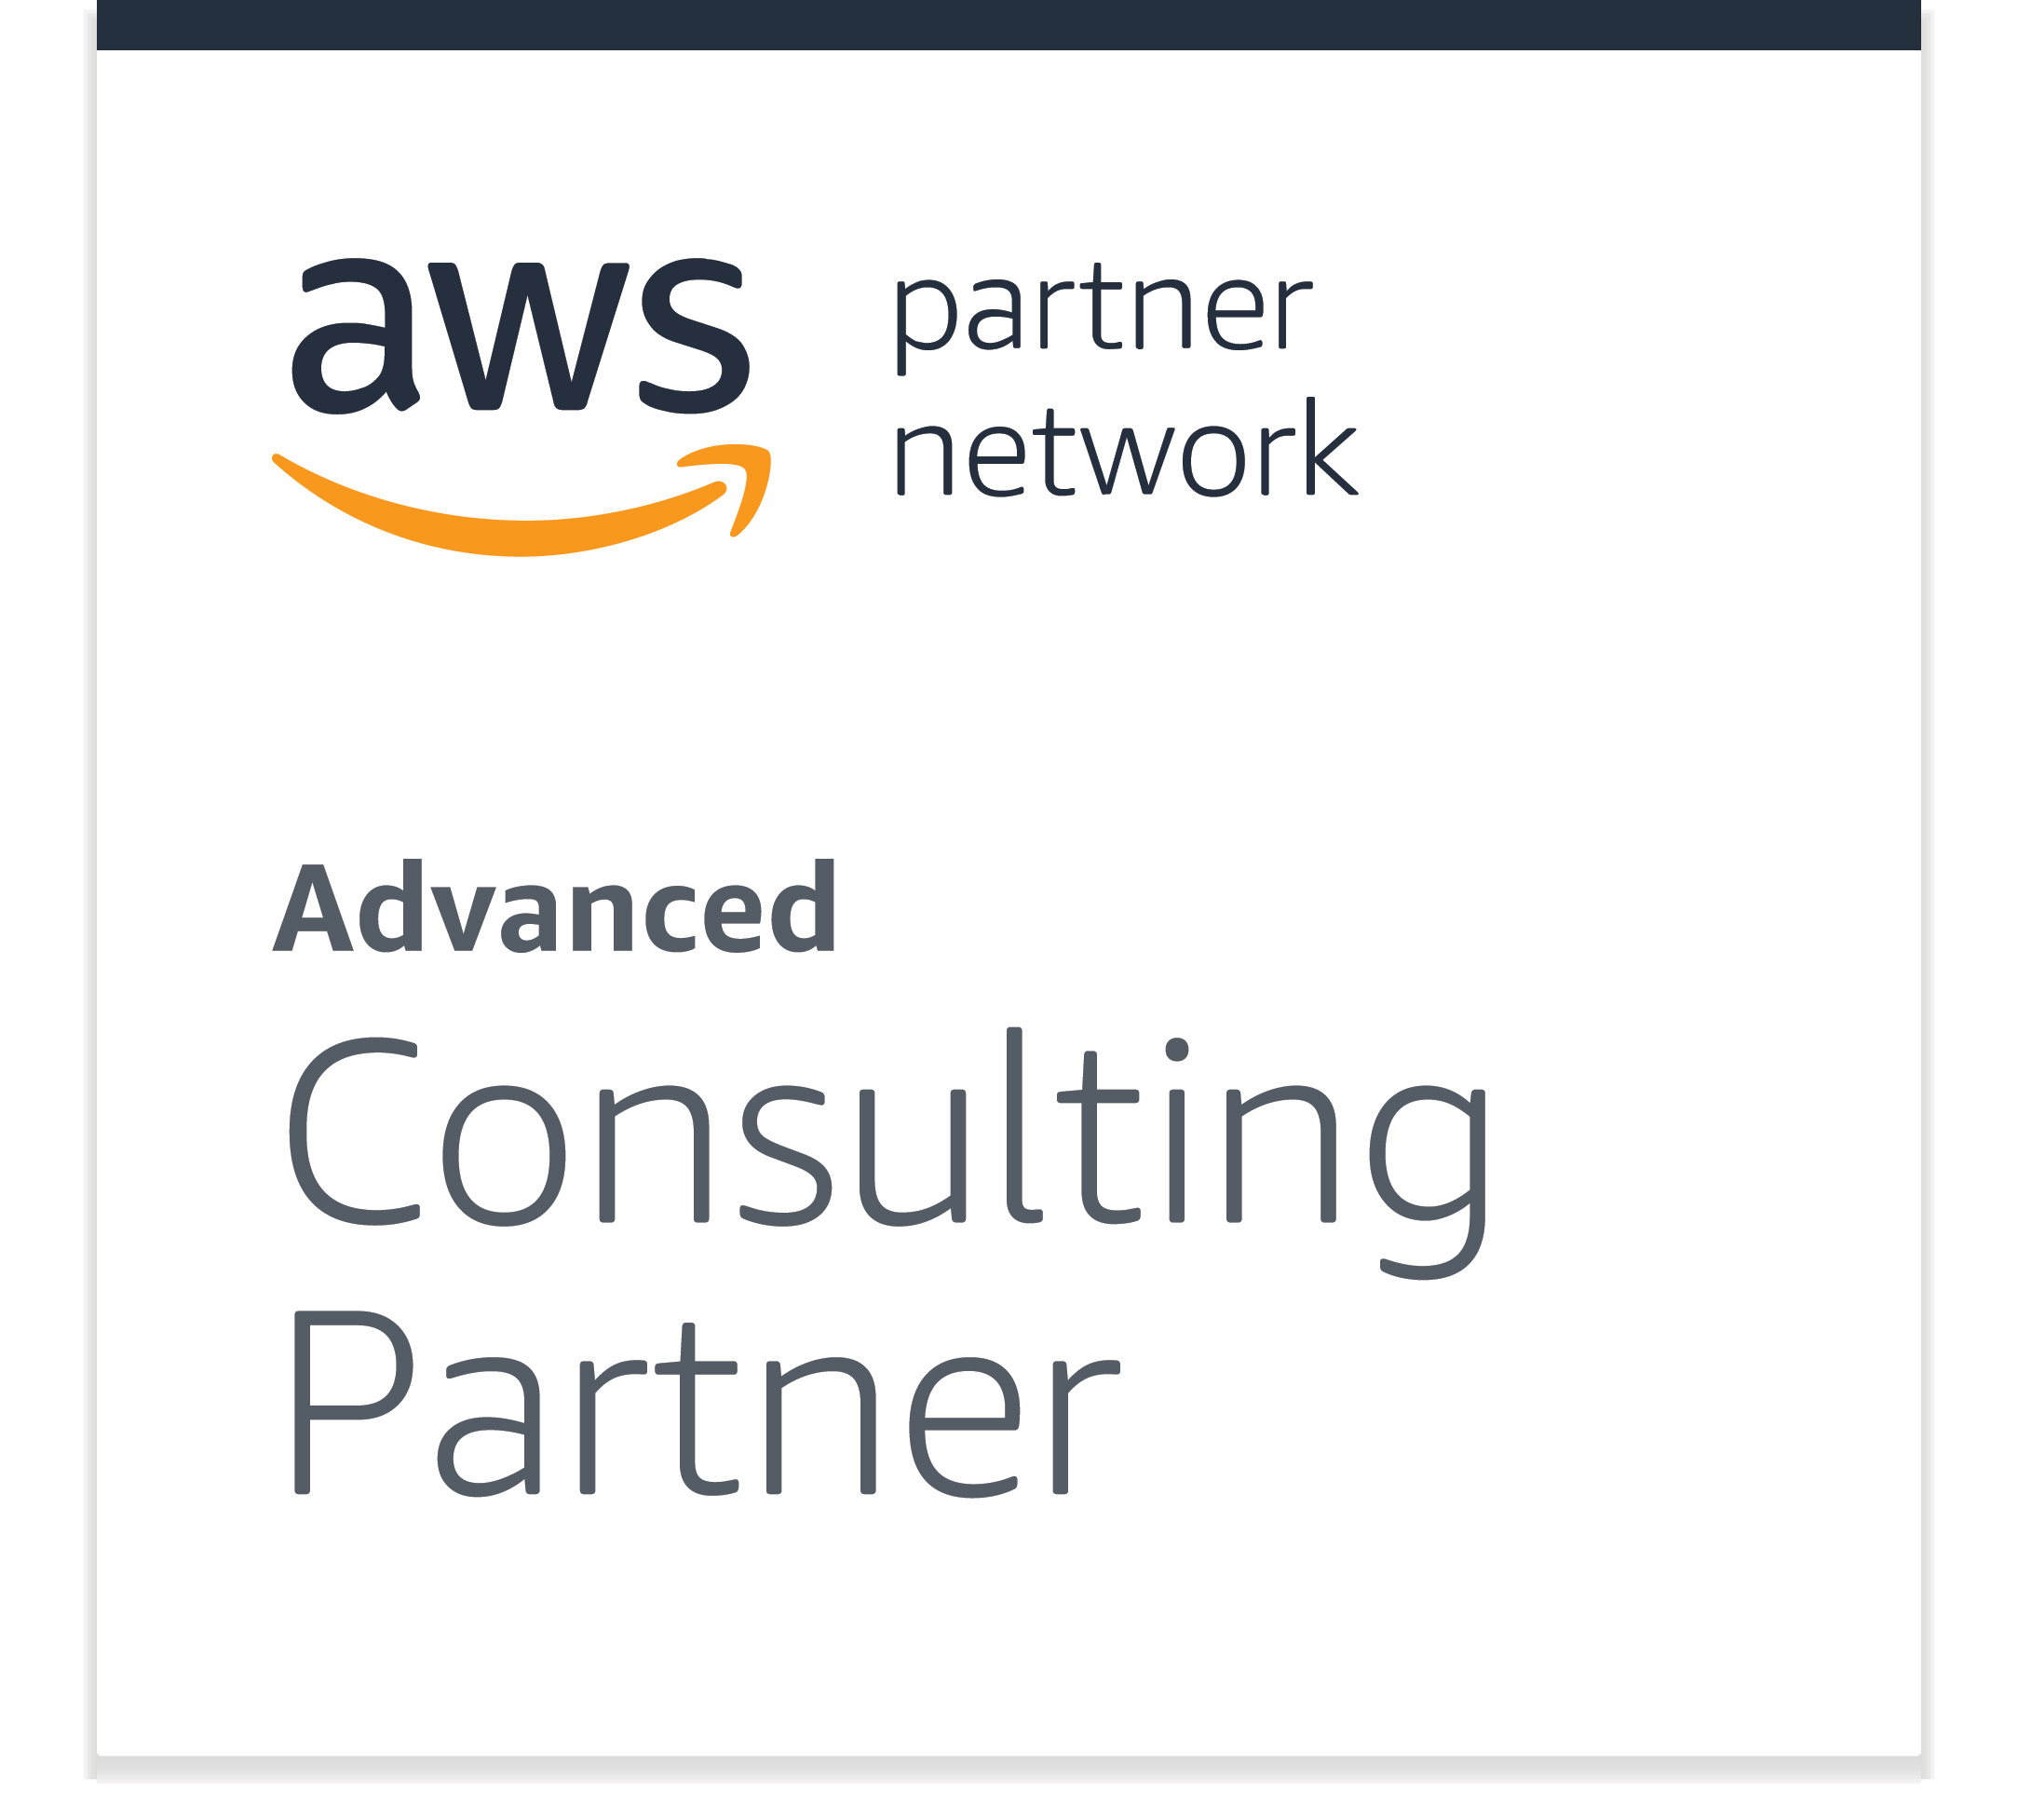 aws-partner-consulting-logo